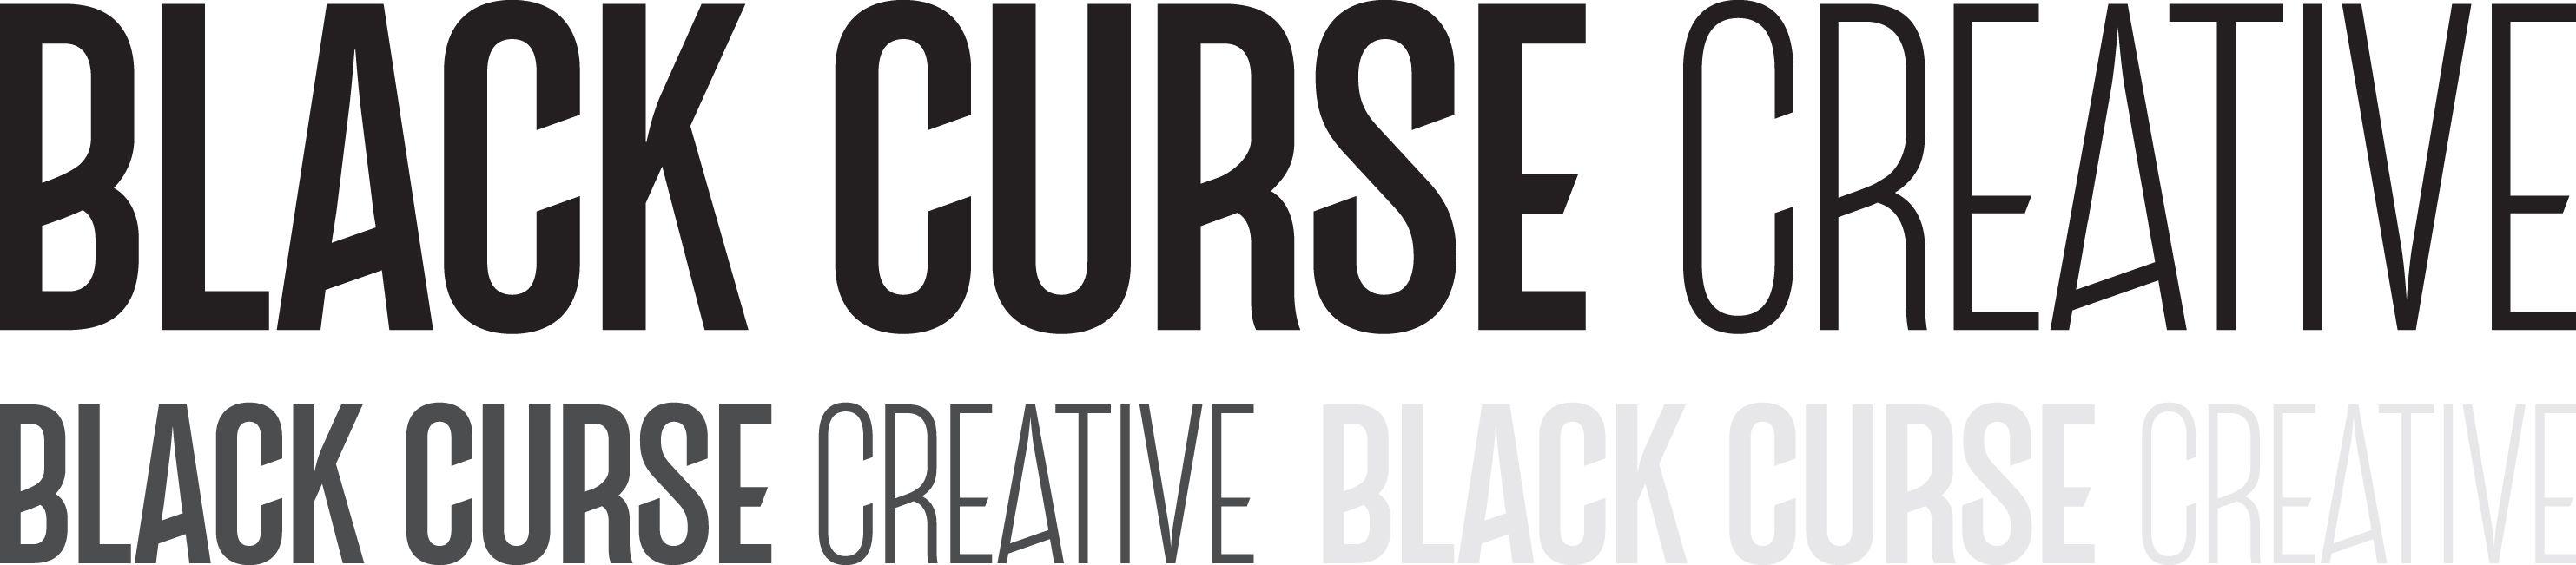 Black Word Logo - Black Curse Creative Rebranding – Black Curse Creative